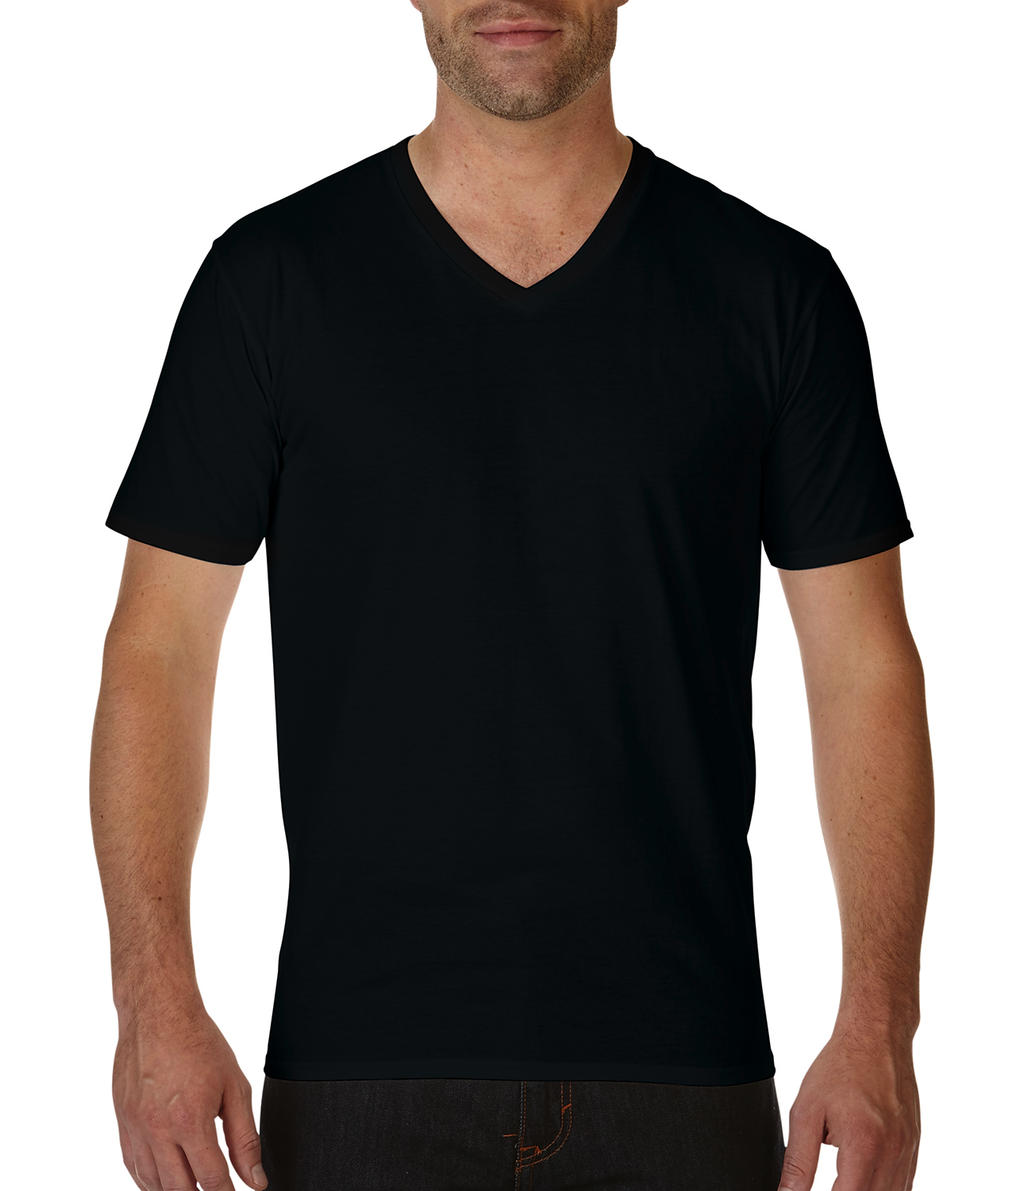  Premium Cotton Adult V-Neck T-Shirt in Farbe Black